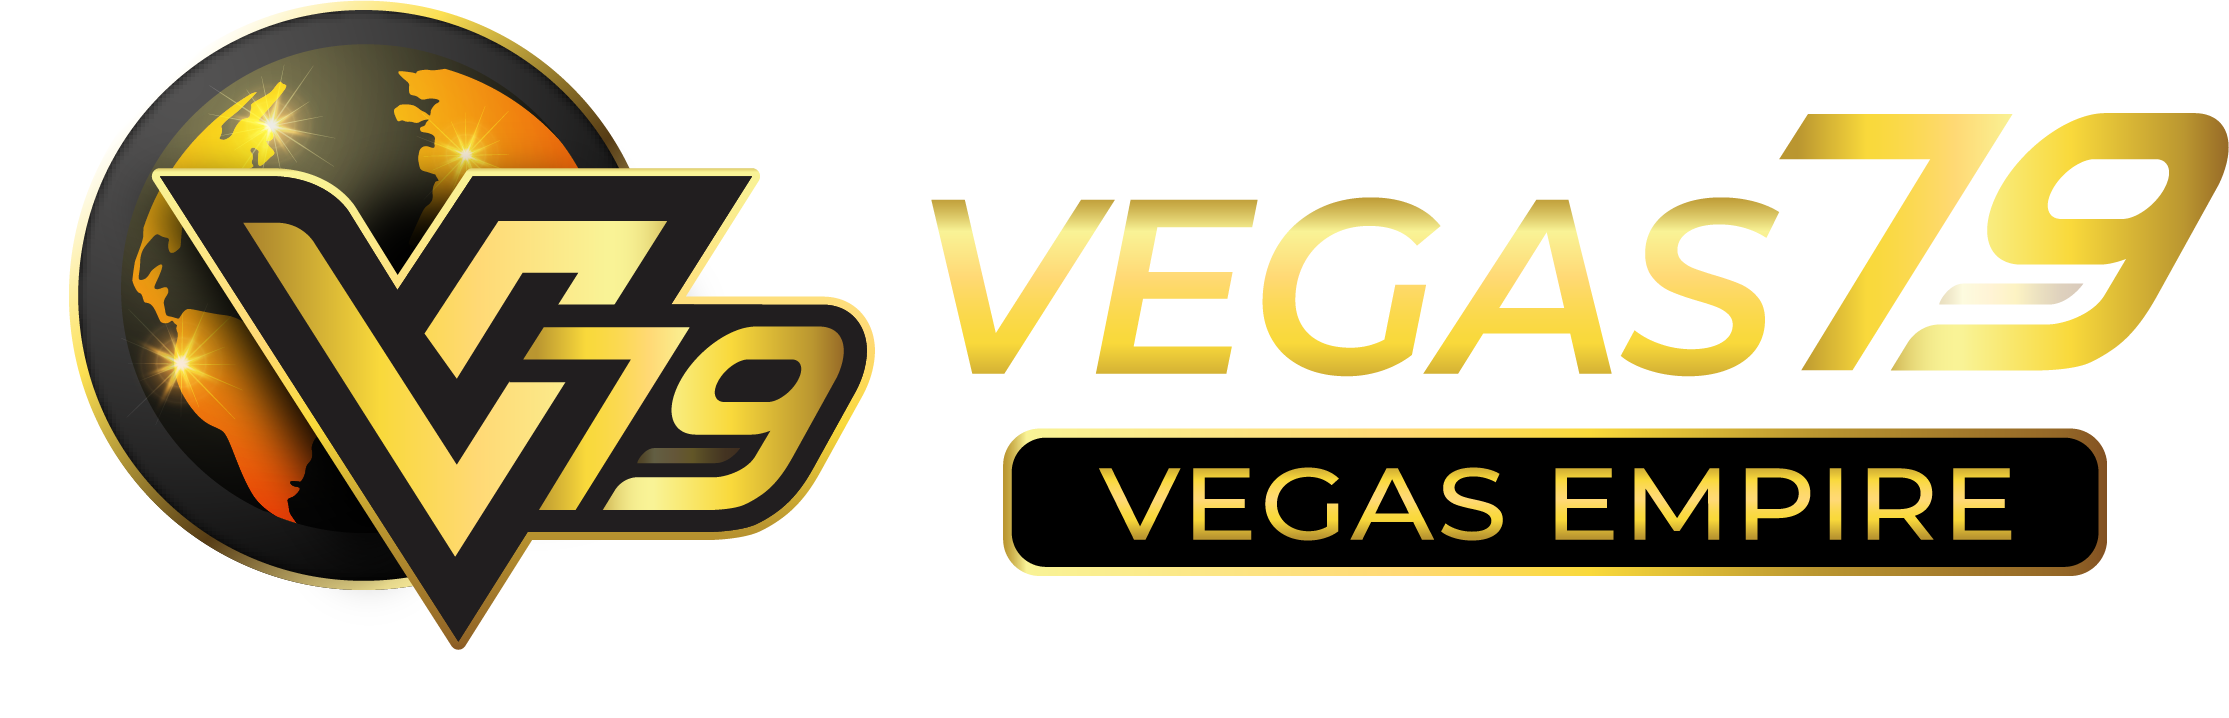 Vegas79.ac